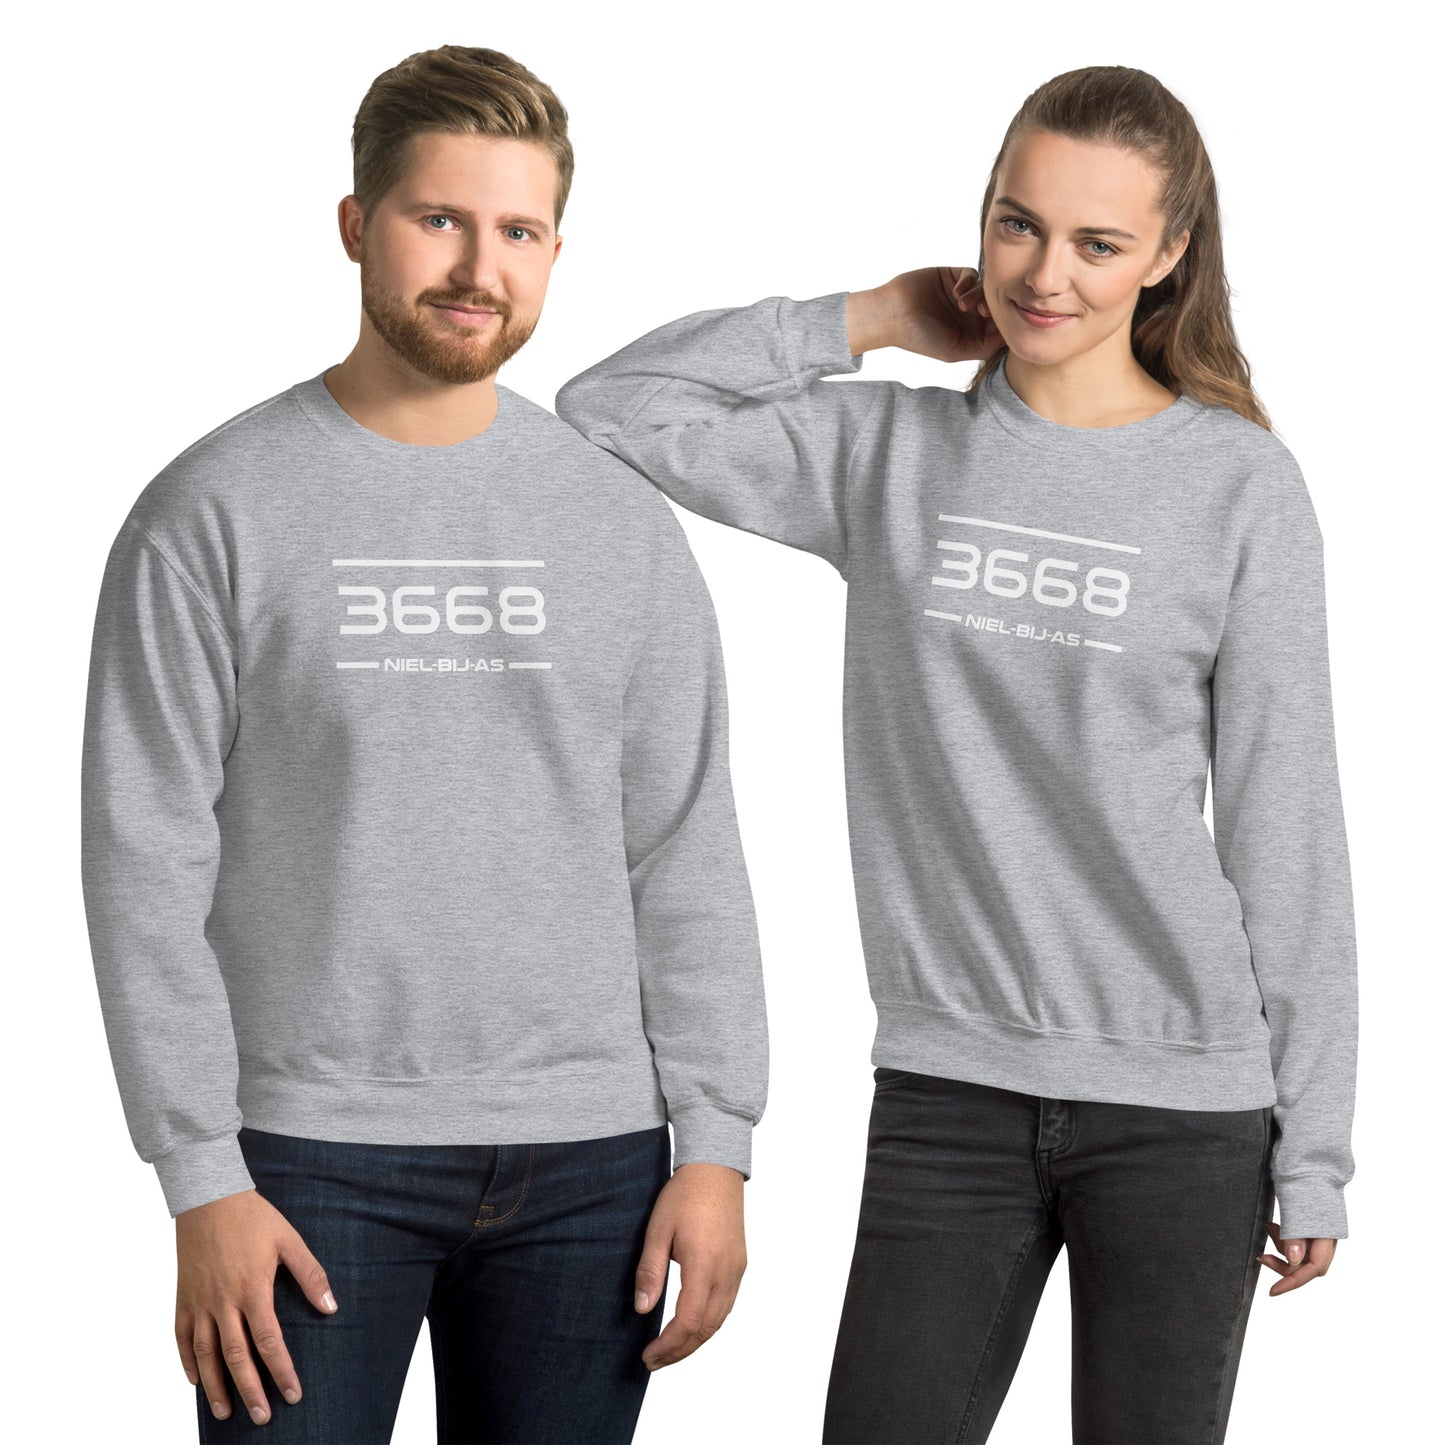 Sweater - 3668 - Niel-Bij-As (M/V)